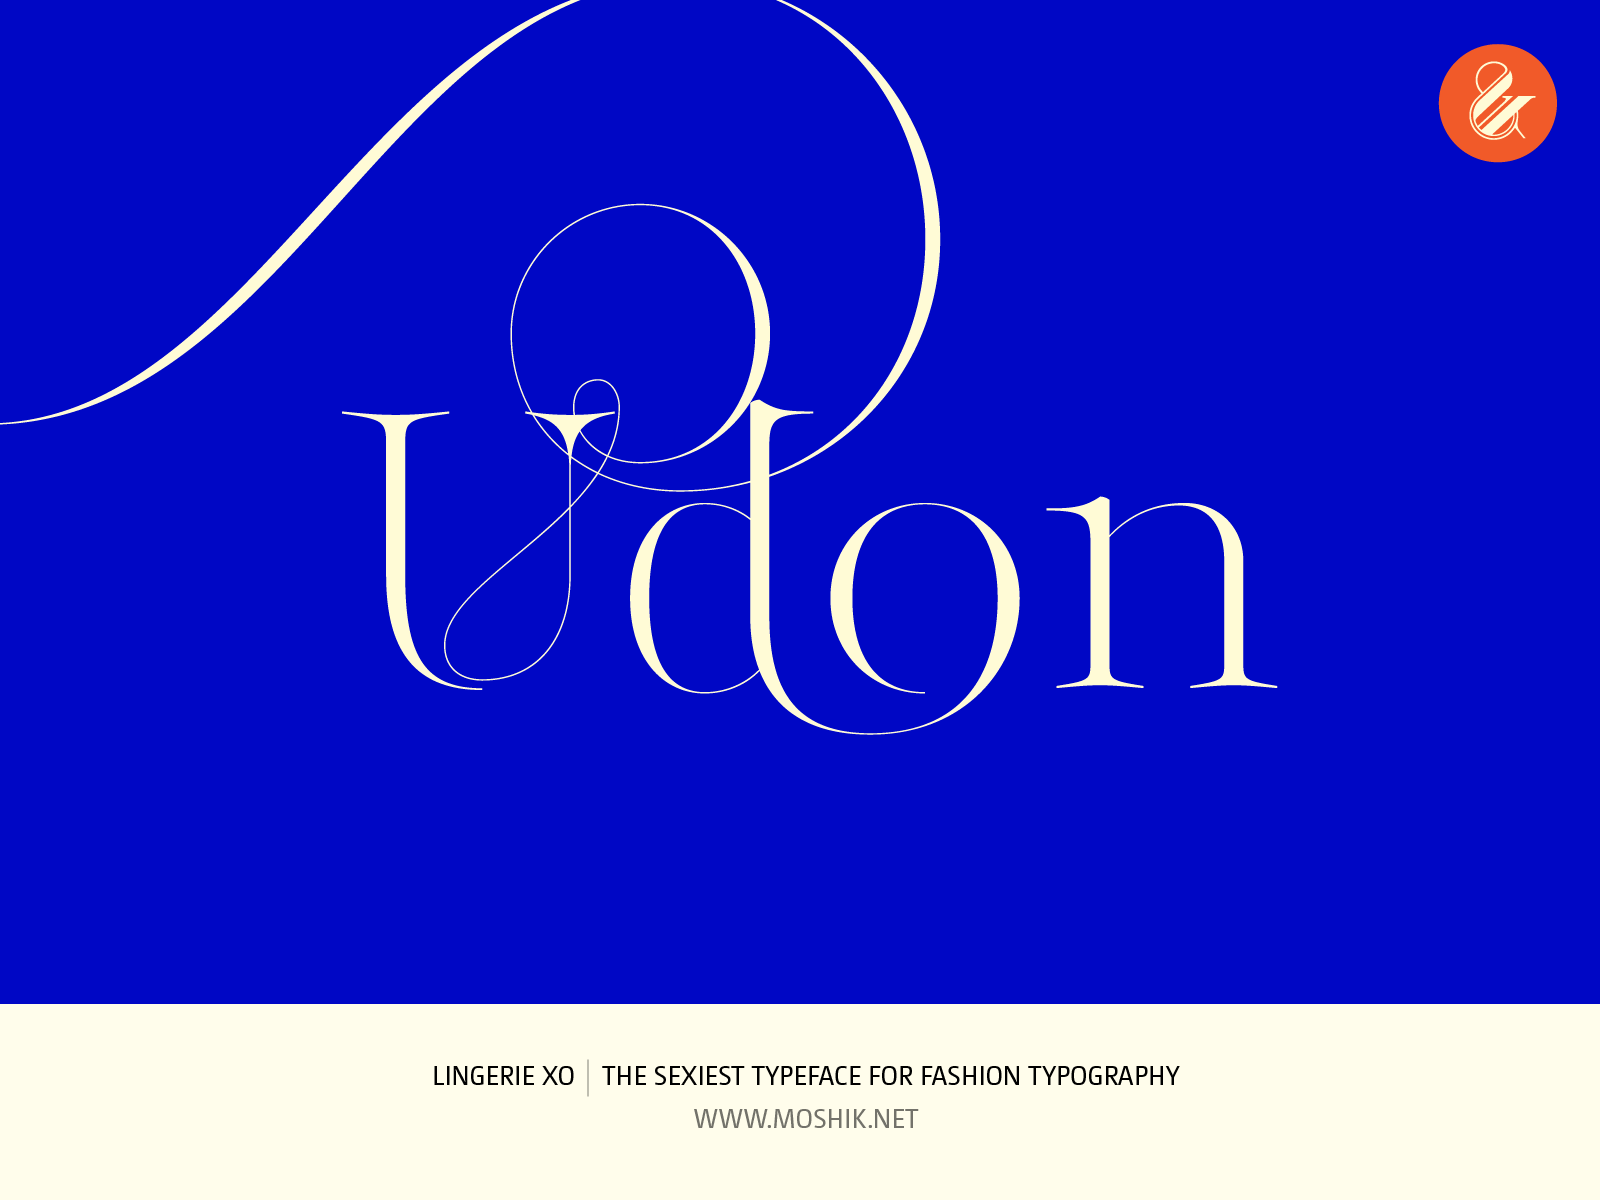 Udon logo, Lingerie XO Typeface, fashion fonts, best fonts 2021, best fonts for logos, sexy fonts, sexy logos, Vogue fonts, Moshik Nadav, Fashion magazine fonts, Must have fonts